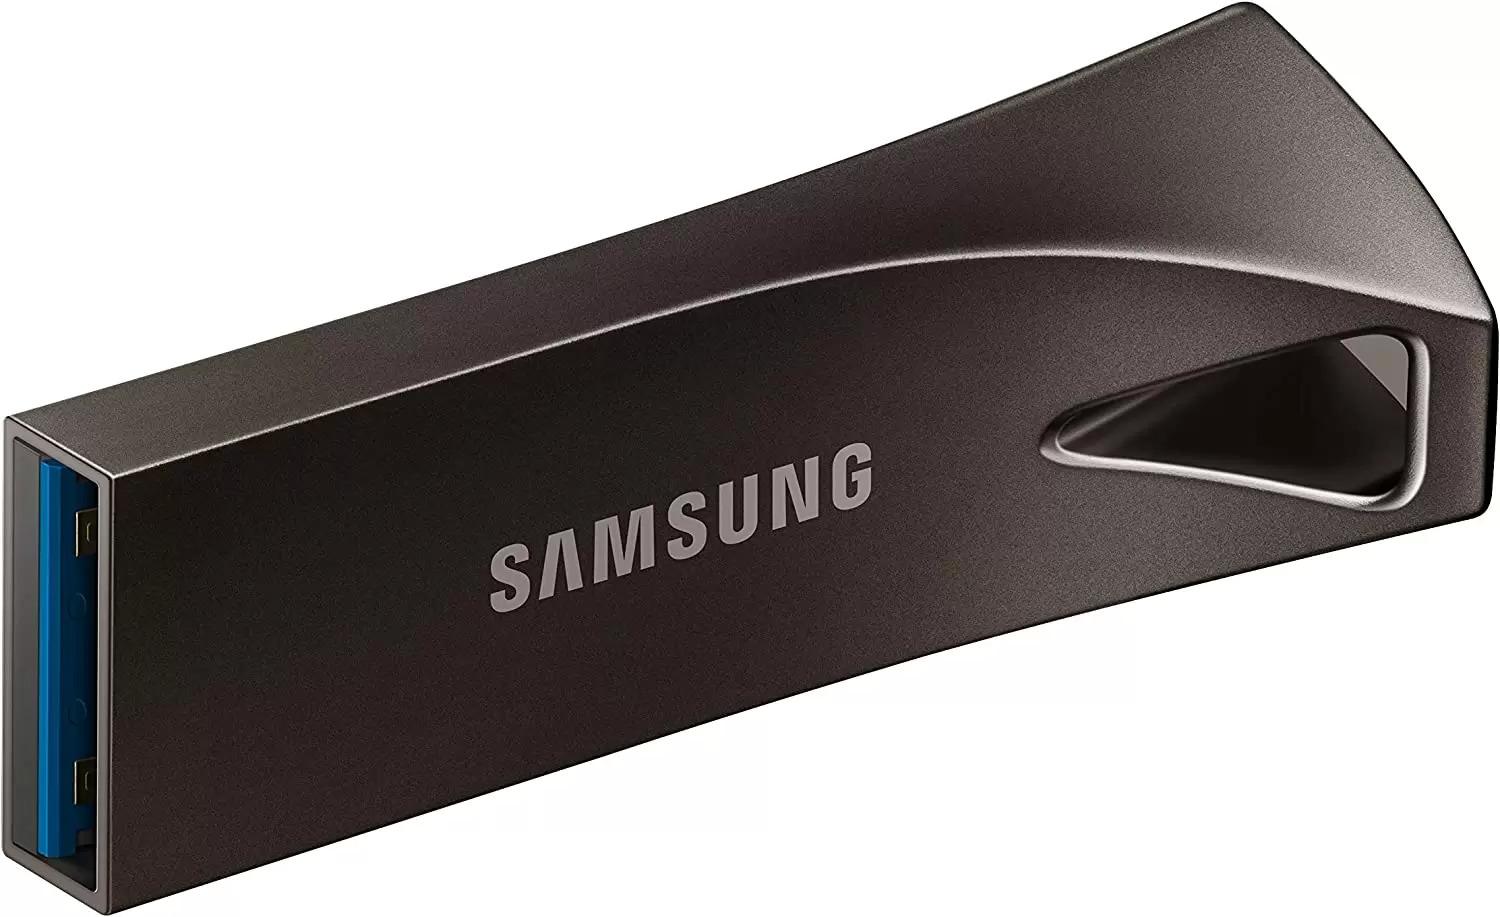 64GB Samsung BAR Plus USB 3.1 Flash Drive for $7.99